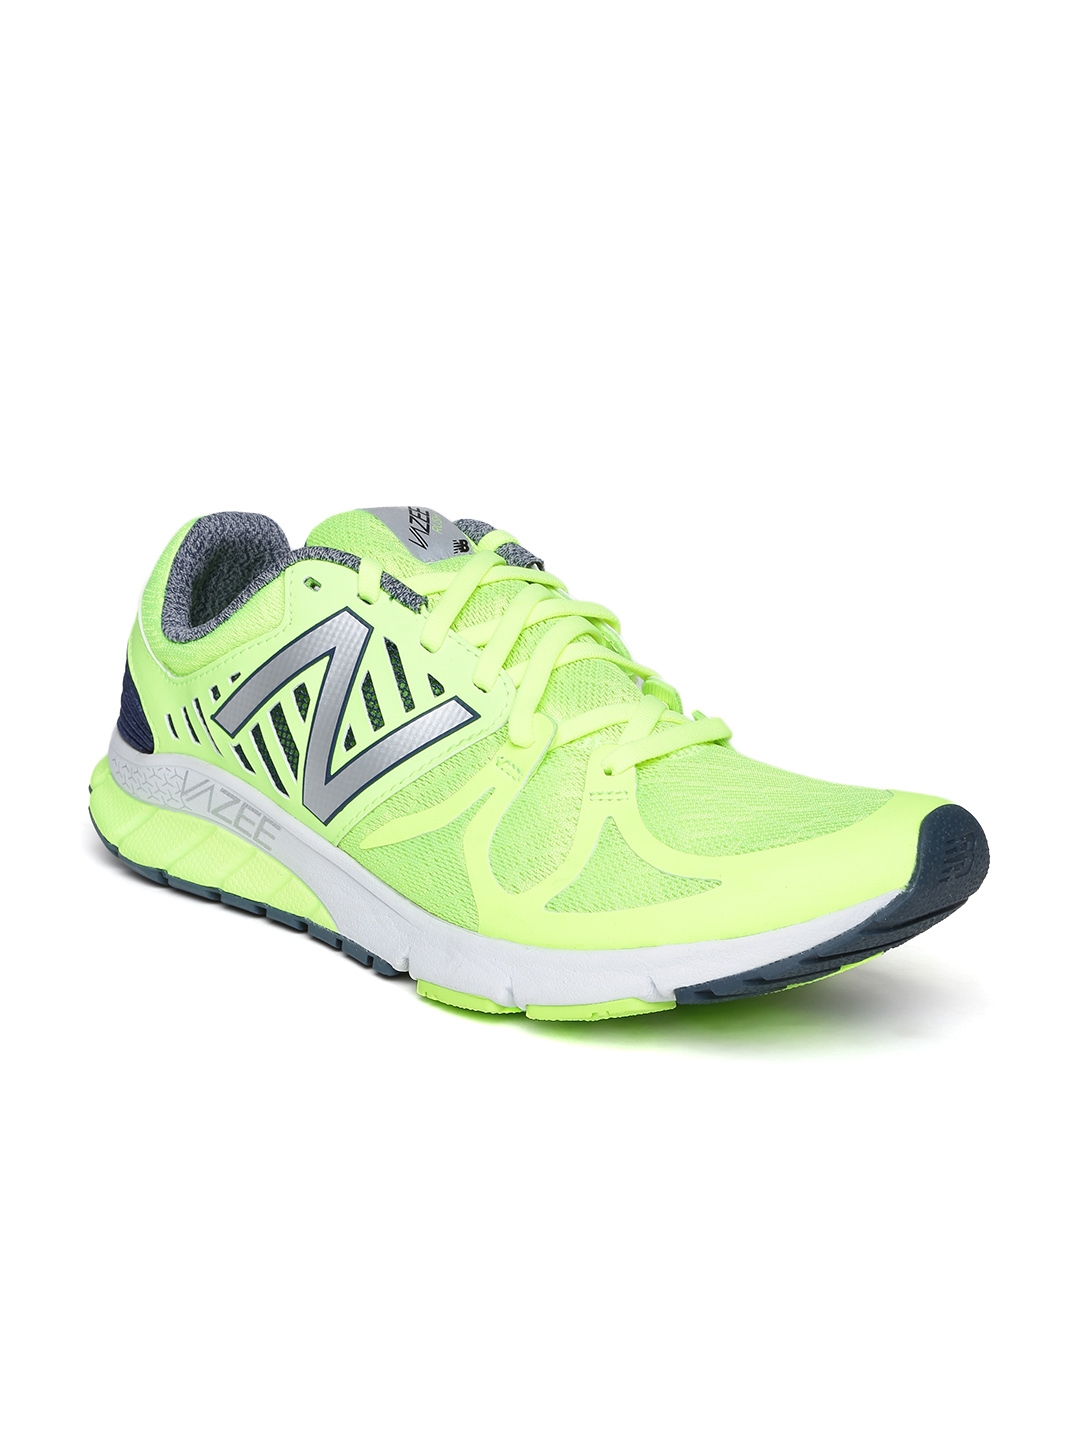 New Balance Men Fluorescent Green MRUSHGY Running Shoes - Sports for Men 1572826 |